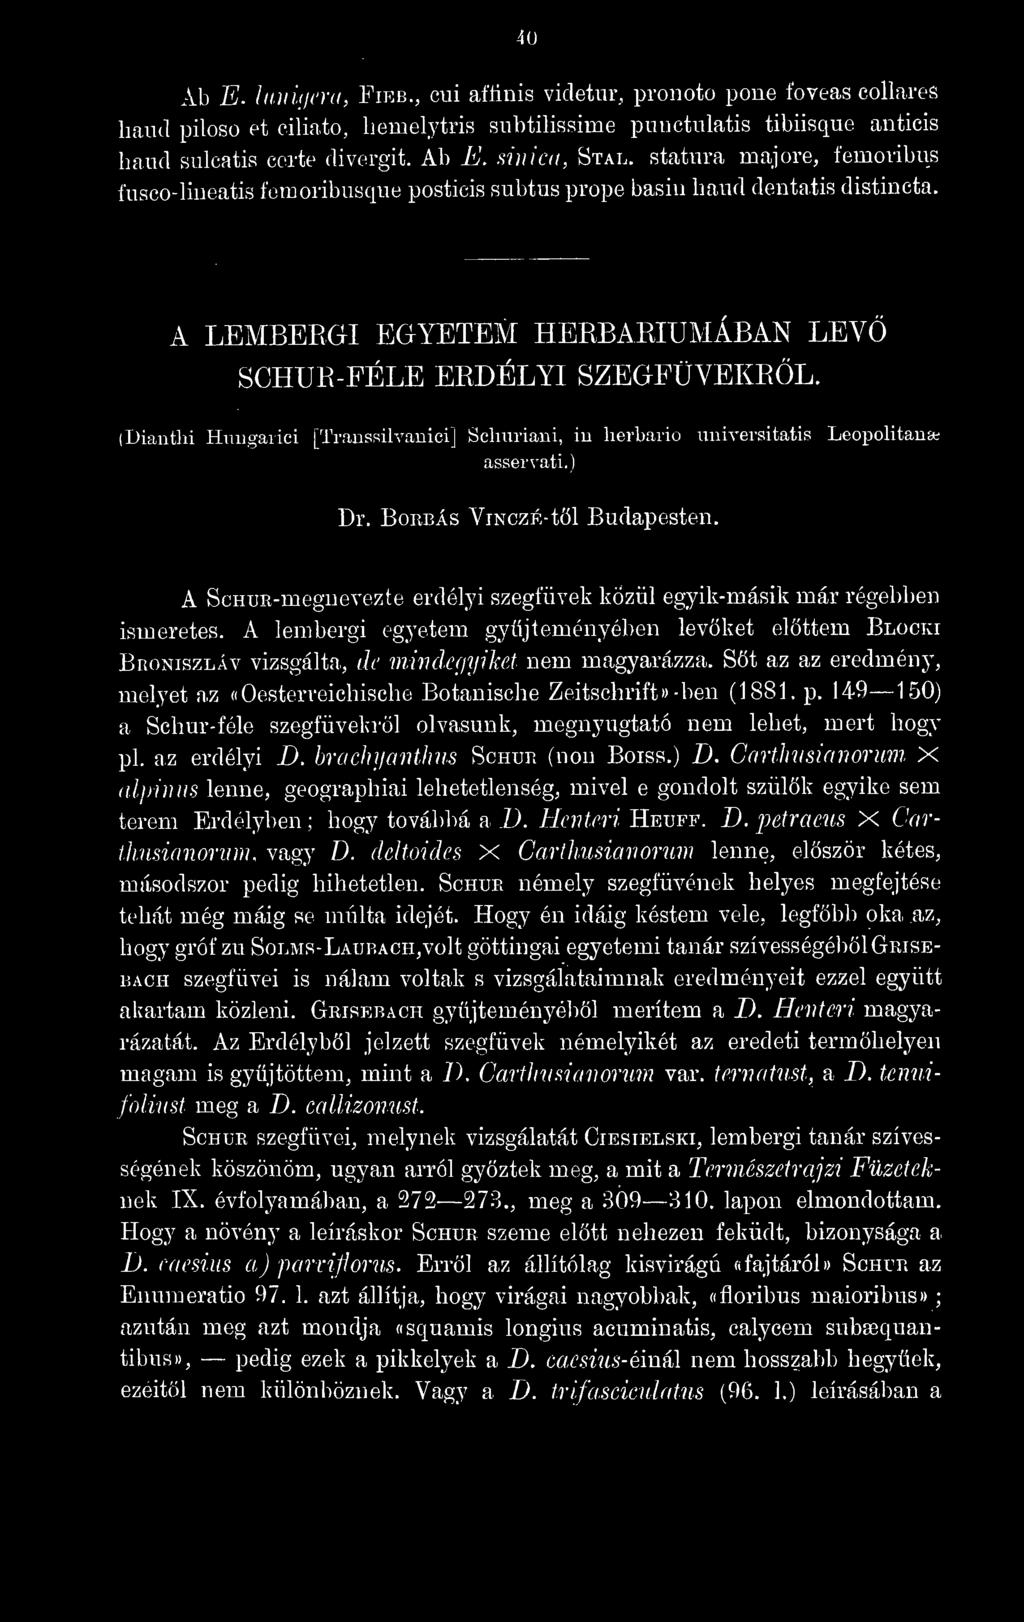 (Diauthi Huiigaiici [Traussilvauiei Scluxriani, iu lierbario uuiversitatis Leopolitana; asaervati.) Dr.